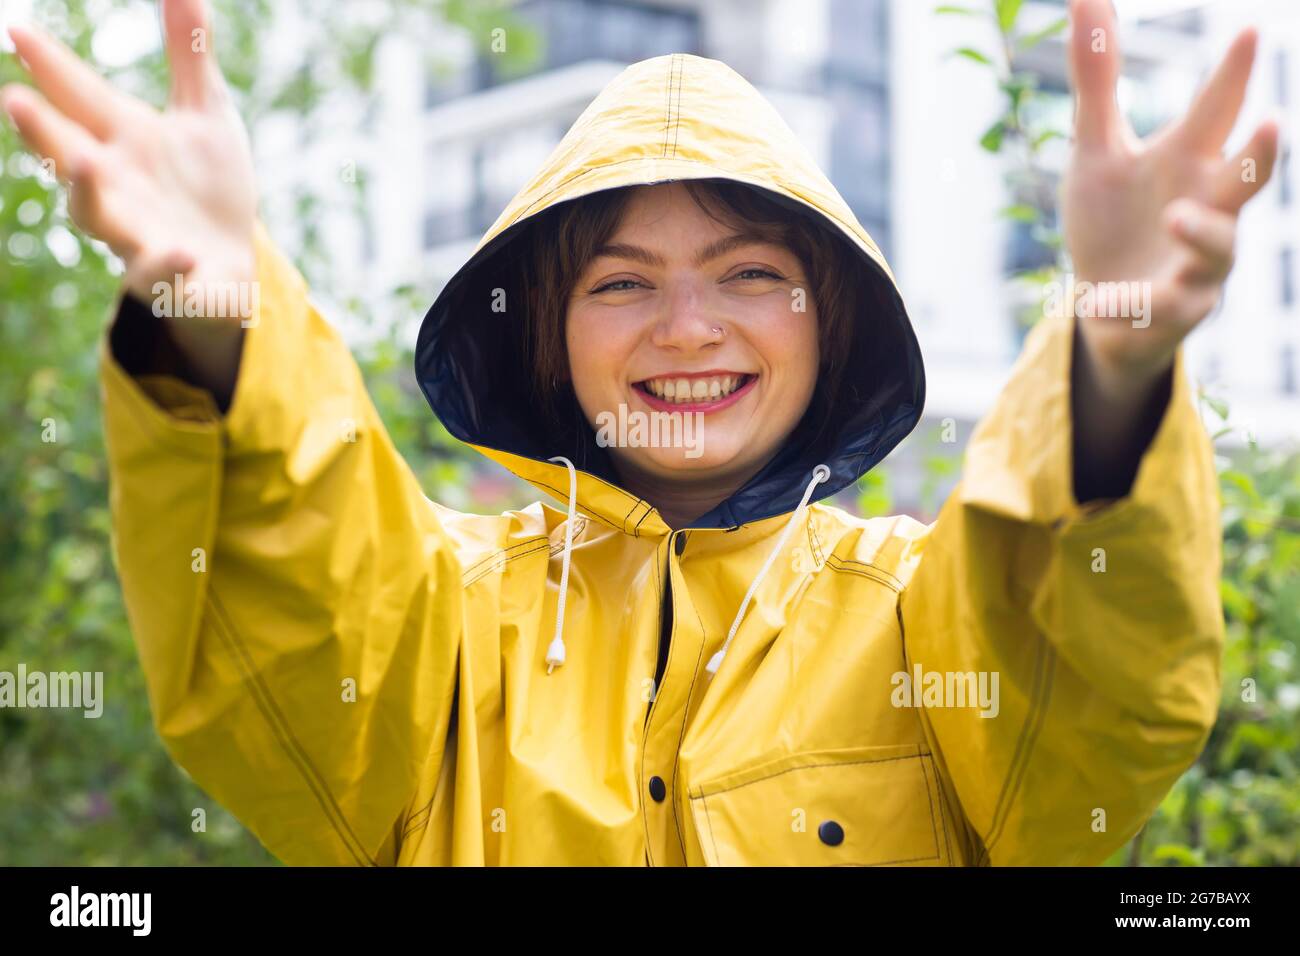 Happy young woman with yellow rain jacket with hood, Baden-Wuerttemberg, Germany Stock Photo